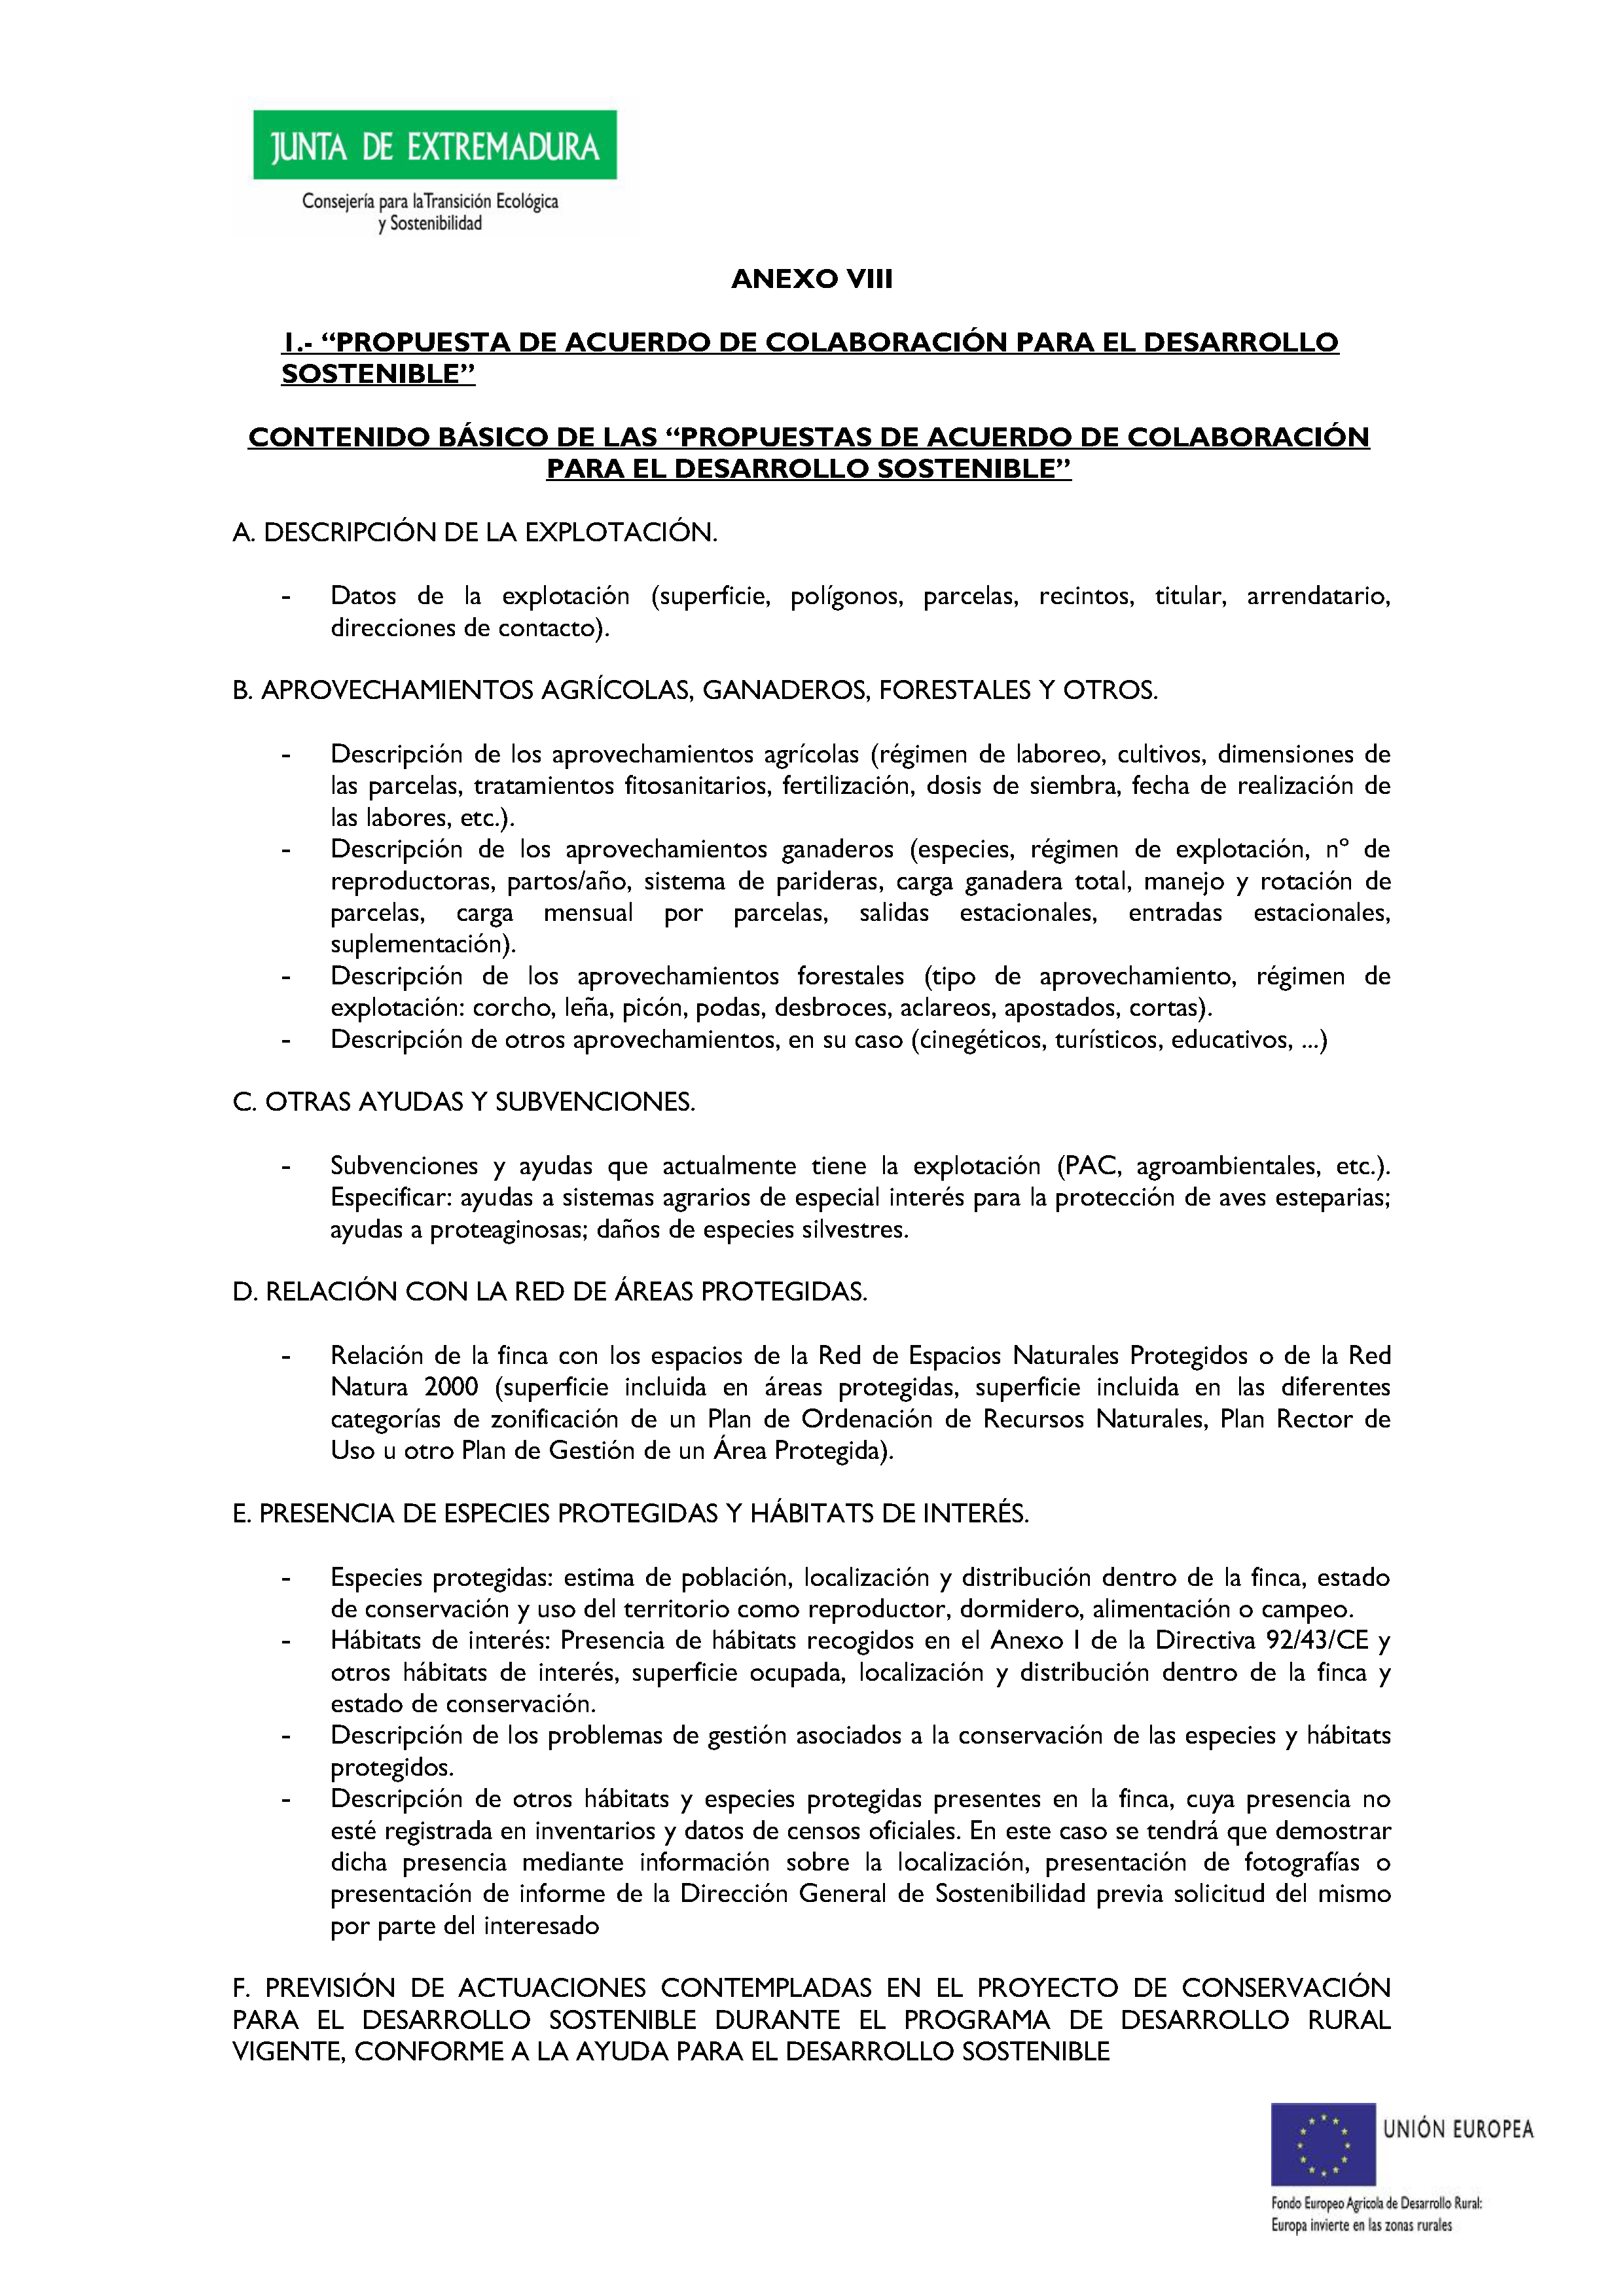 ANEXO VIII 1. PROPUESTA DE ACUERDO DE COLABORACIÓN PARA EL DESARROLLO SOSTENIBLE Pag 1